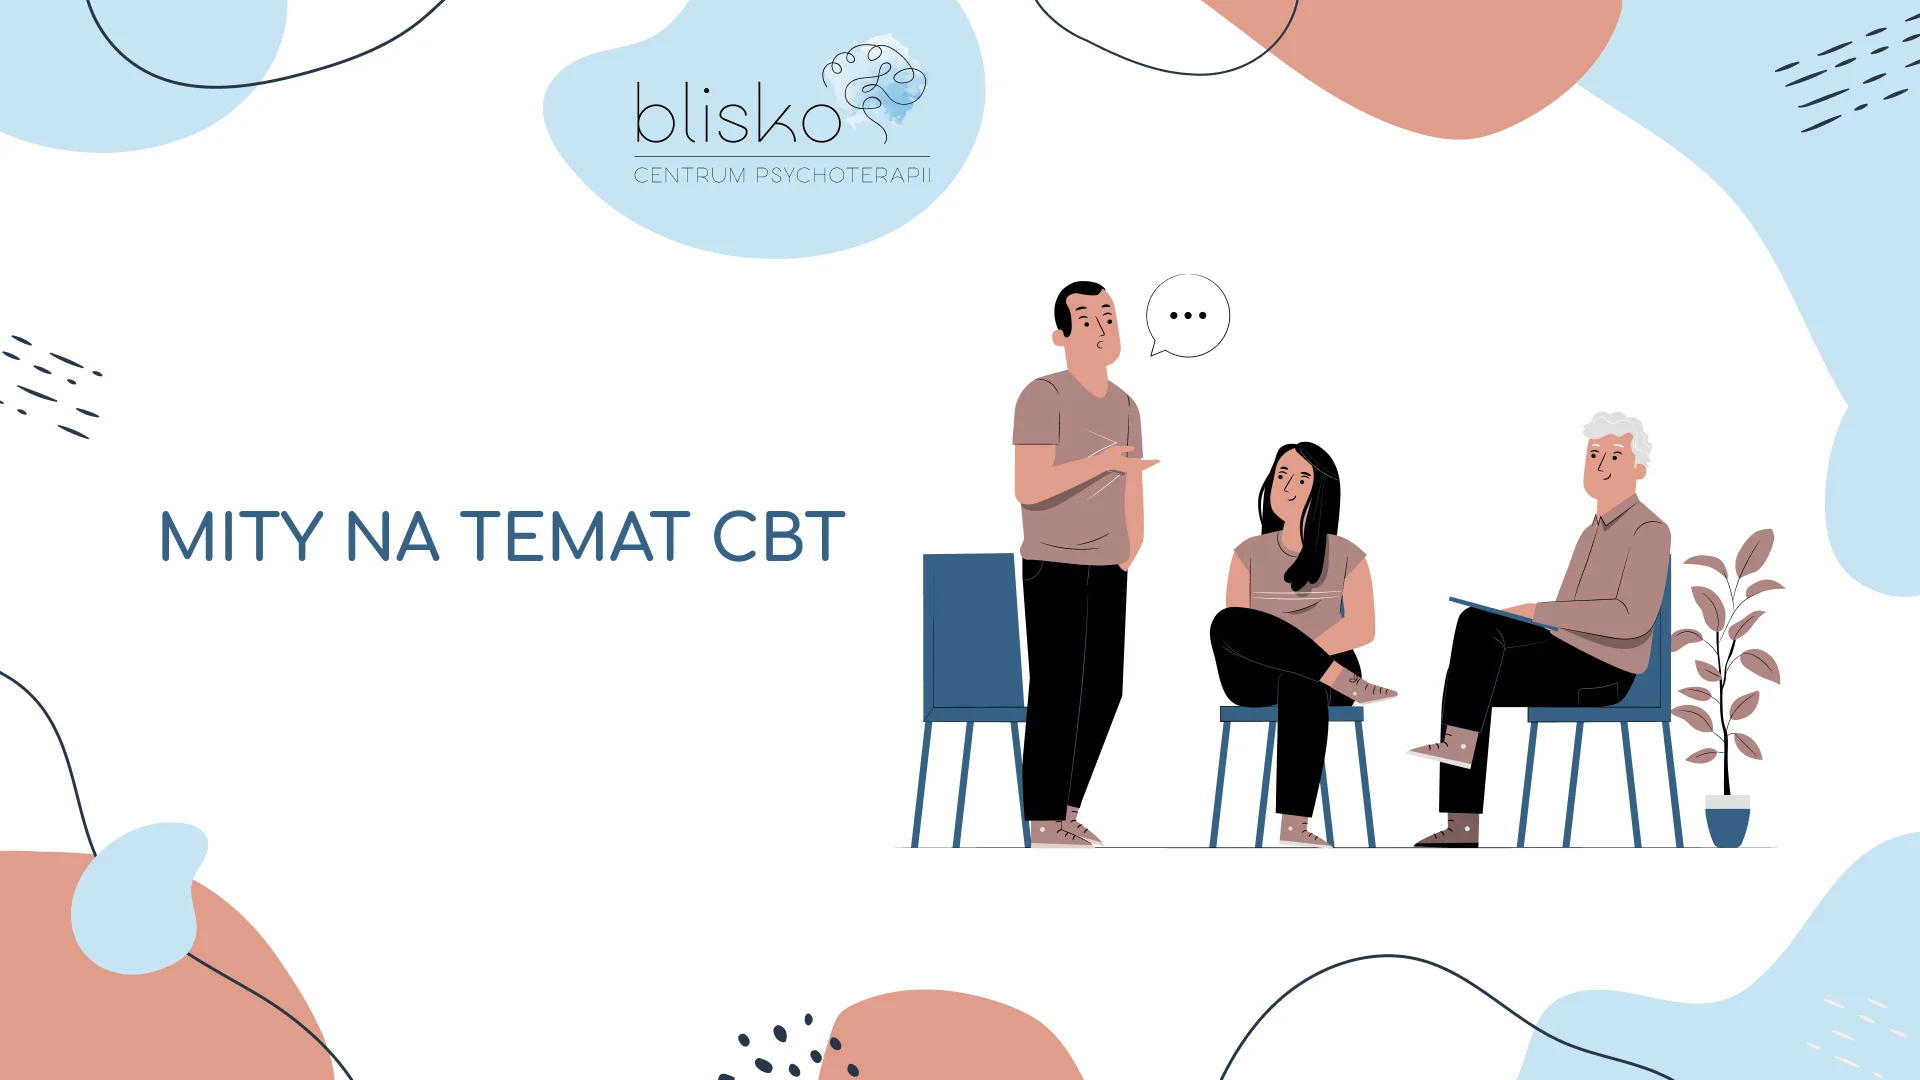 Mity na temat terapii CBT